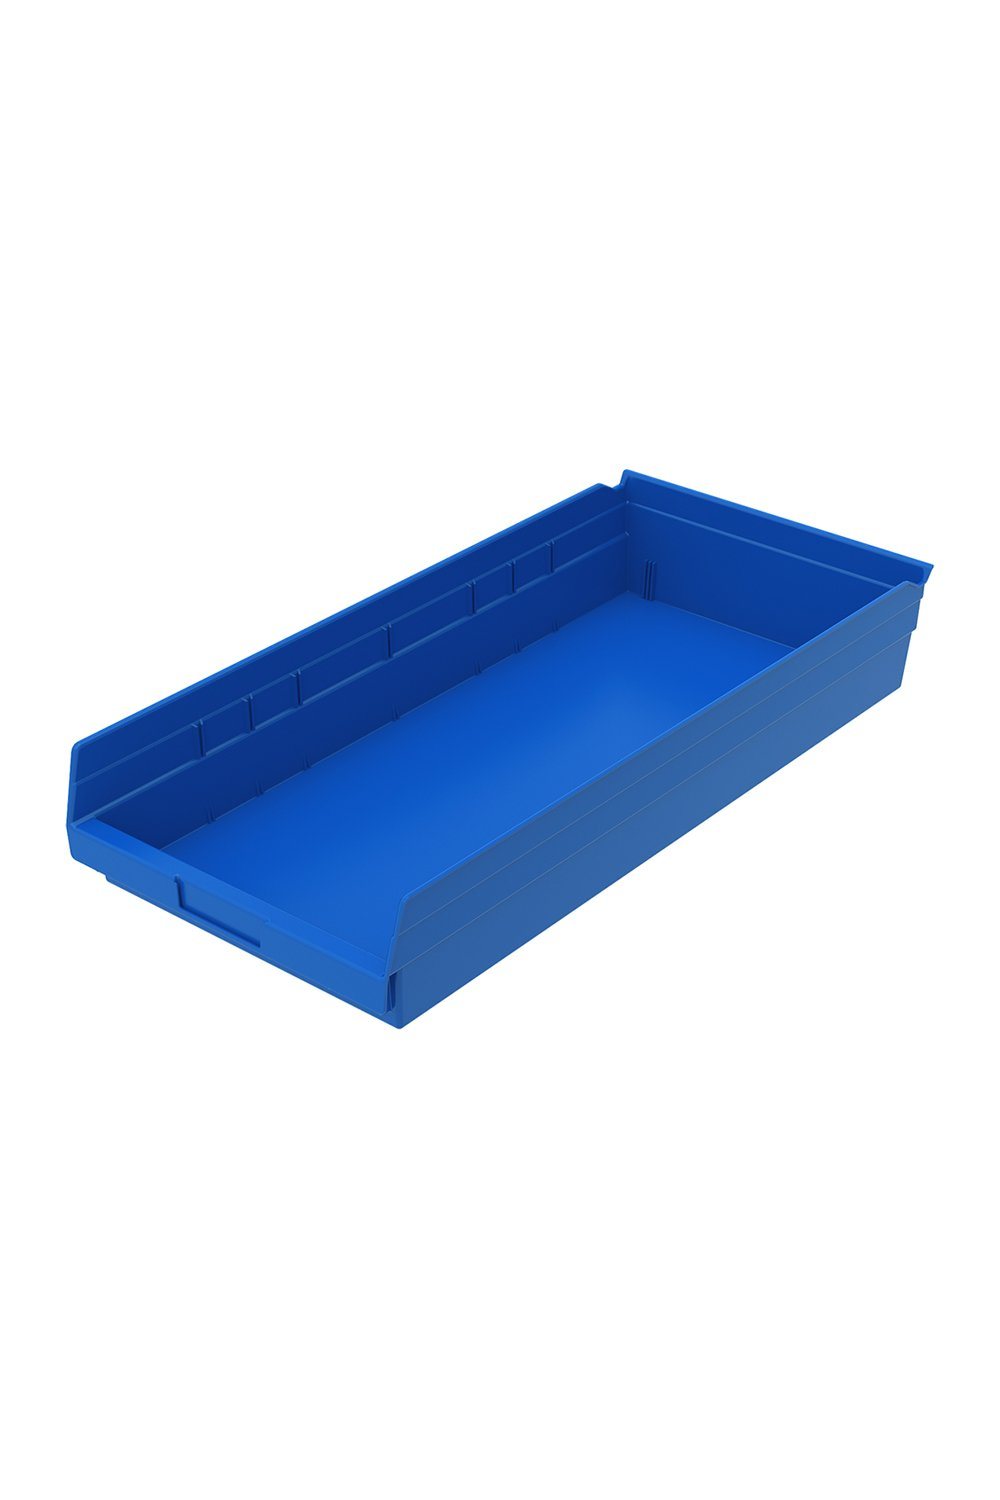 Shelf Bin for 24"D Shelves Bins & Containers Acart 23-5/8'' x 11-1/8'' x 4'' Blue 